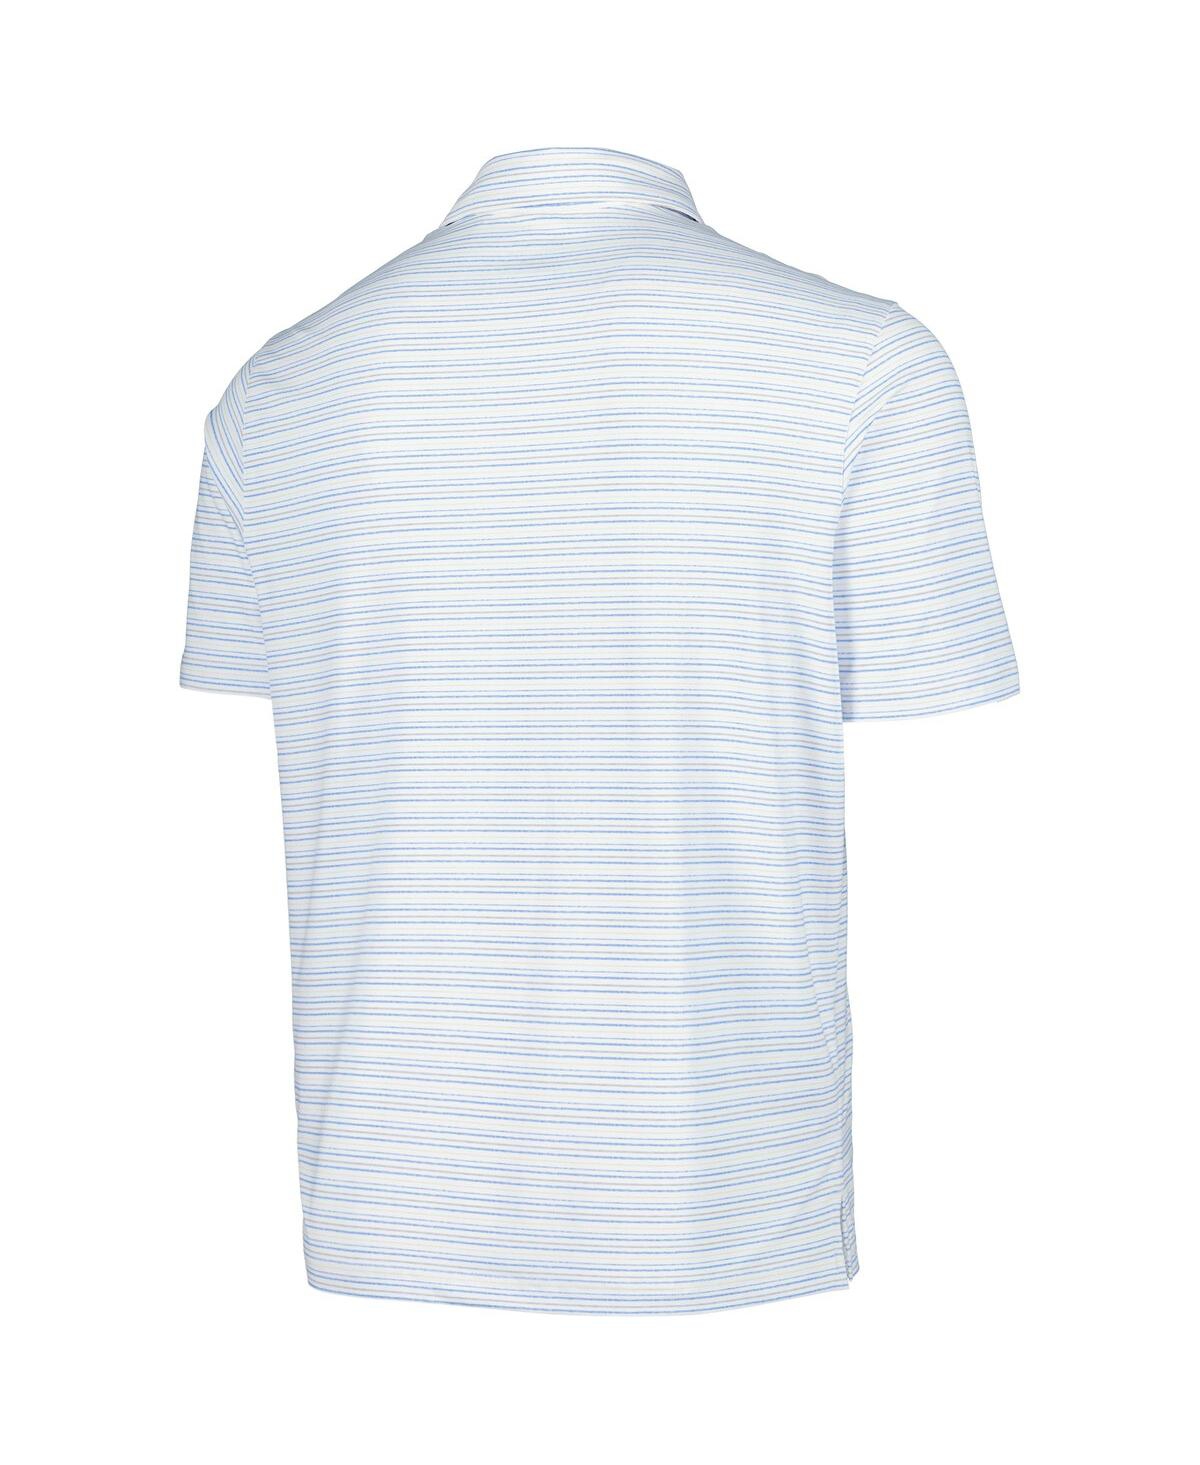 Shop Ahead Men's  White Wgc-dell Technologies Match Play Islander Feed Striped Polo Shirt